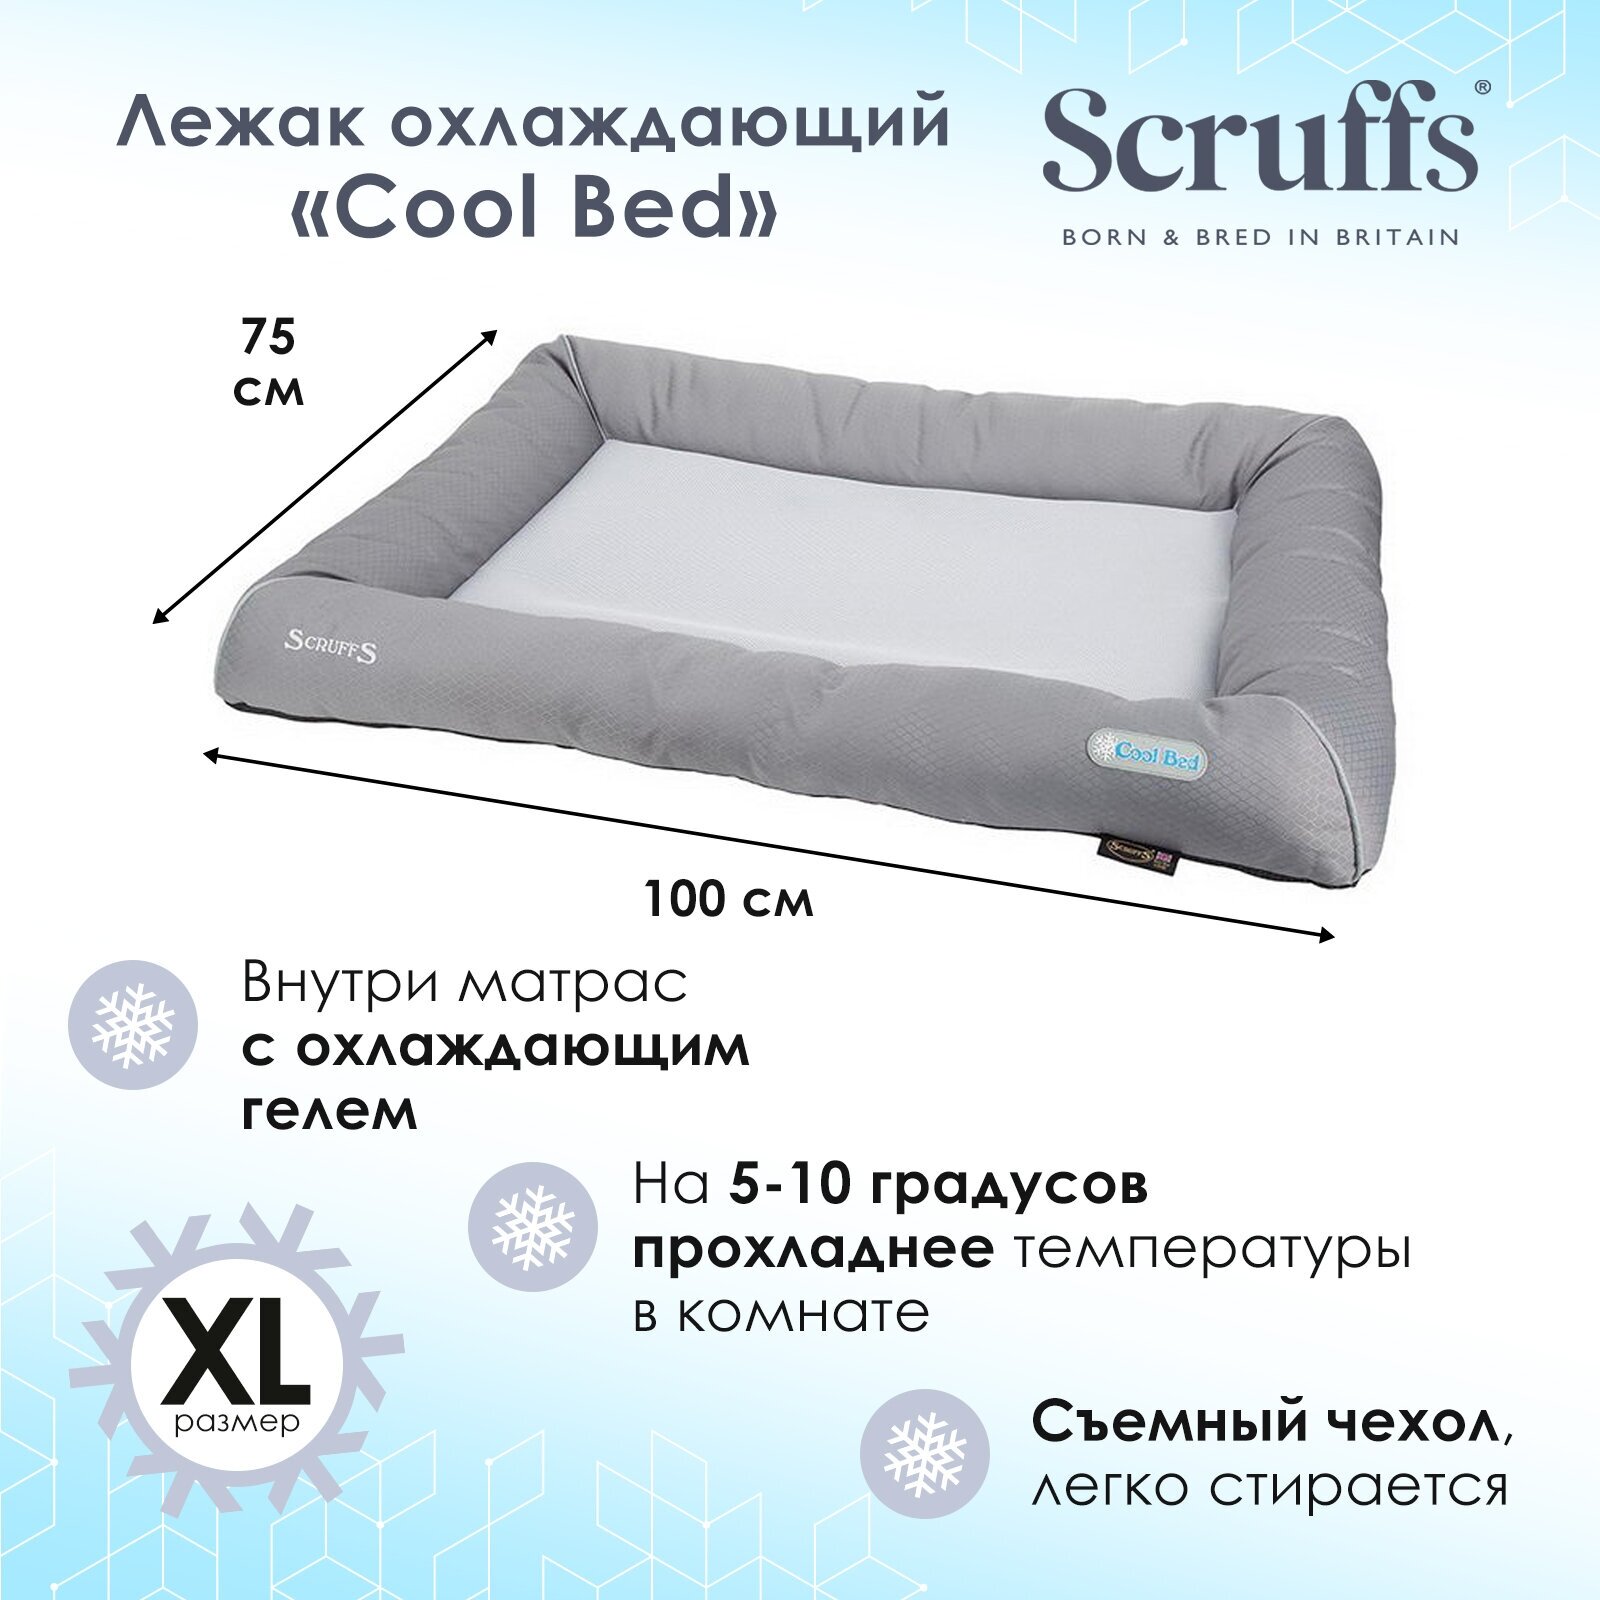 Охлаждающий лежак SCRUFFS "Cool Bed", серый 100*75см (Великобритания)